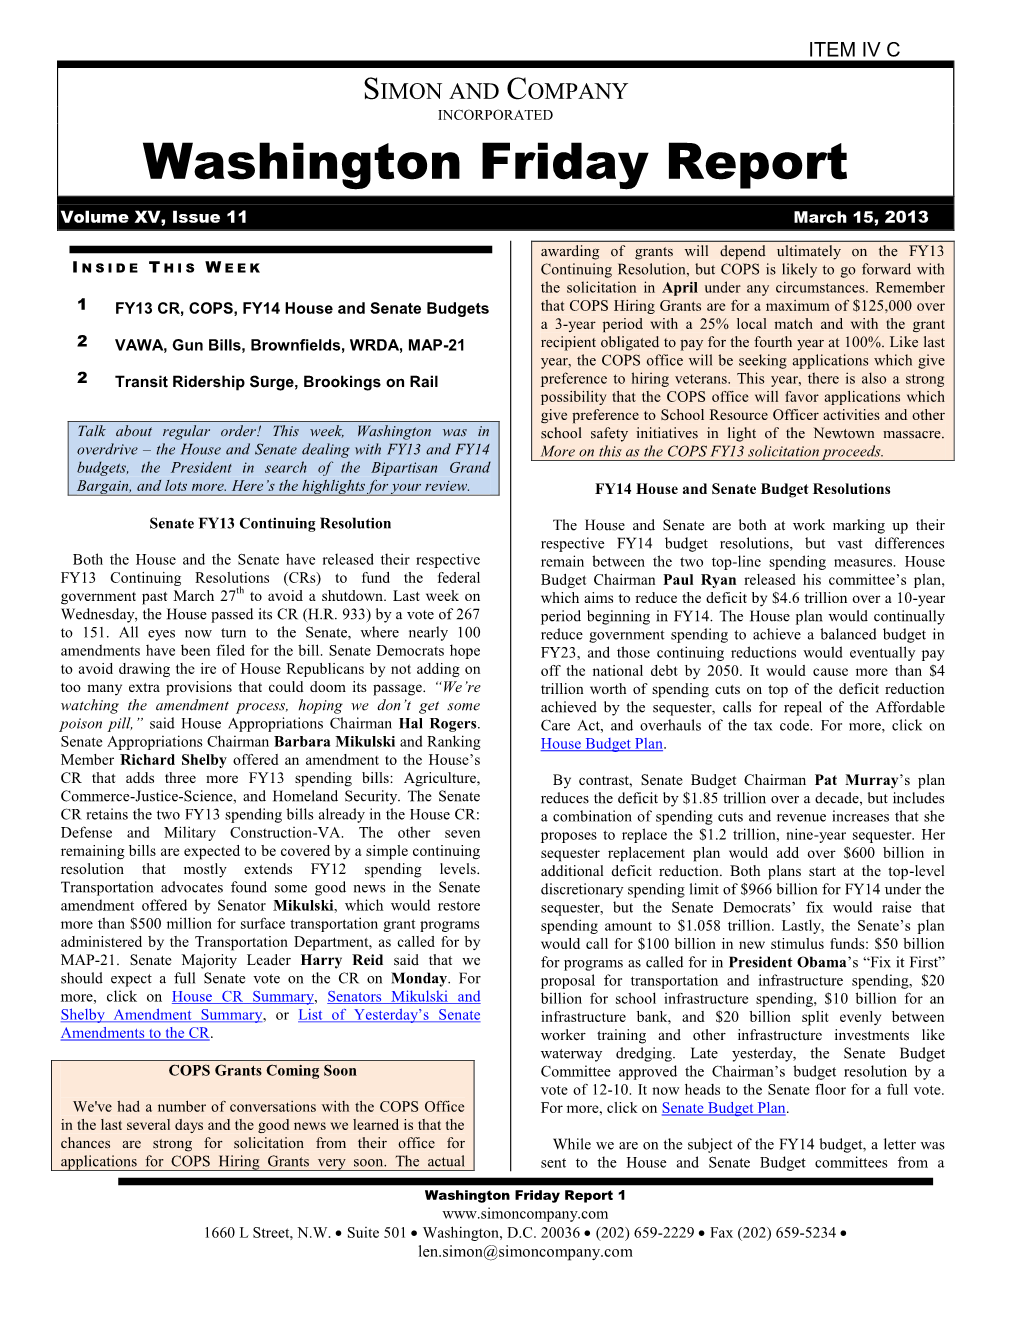 Washington Friday Report